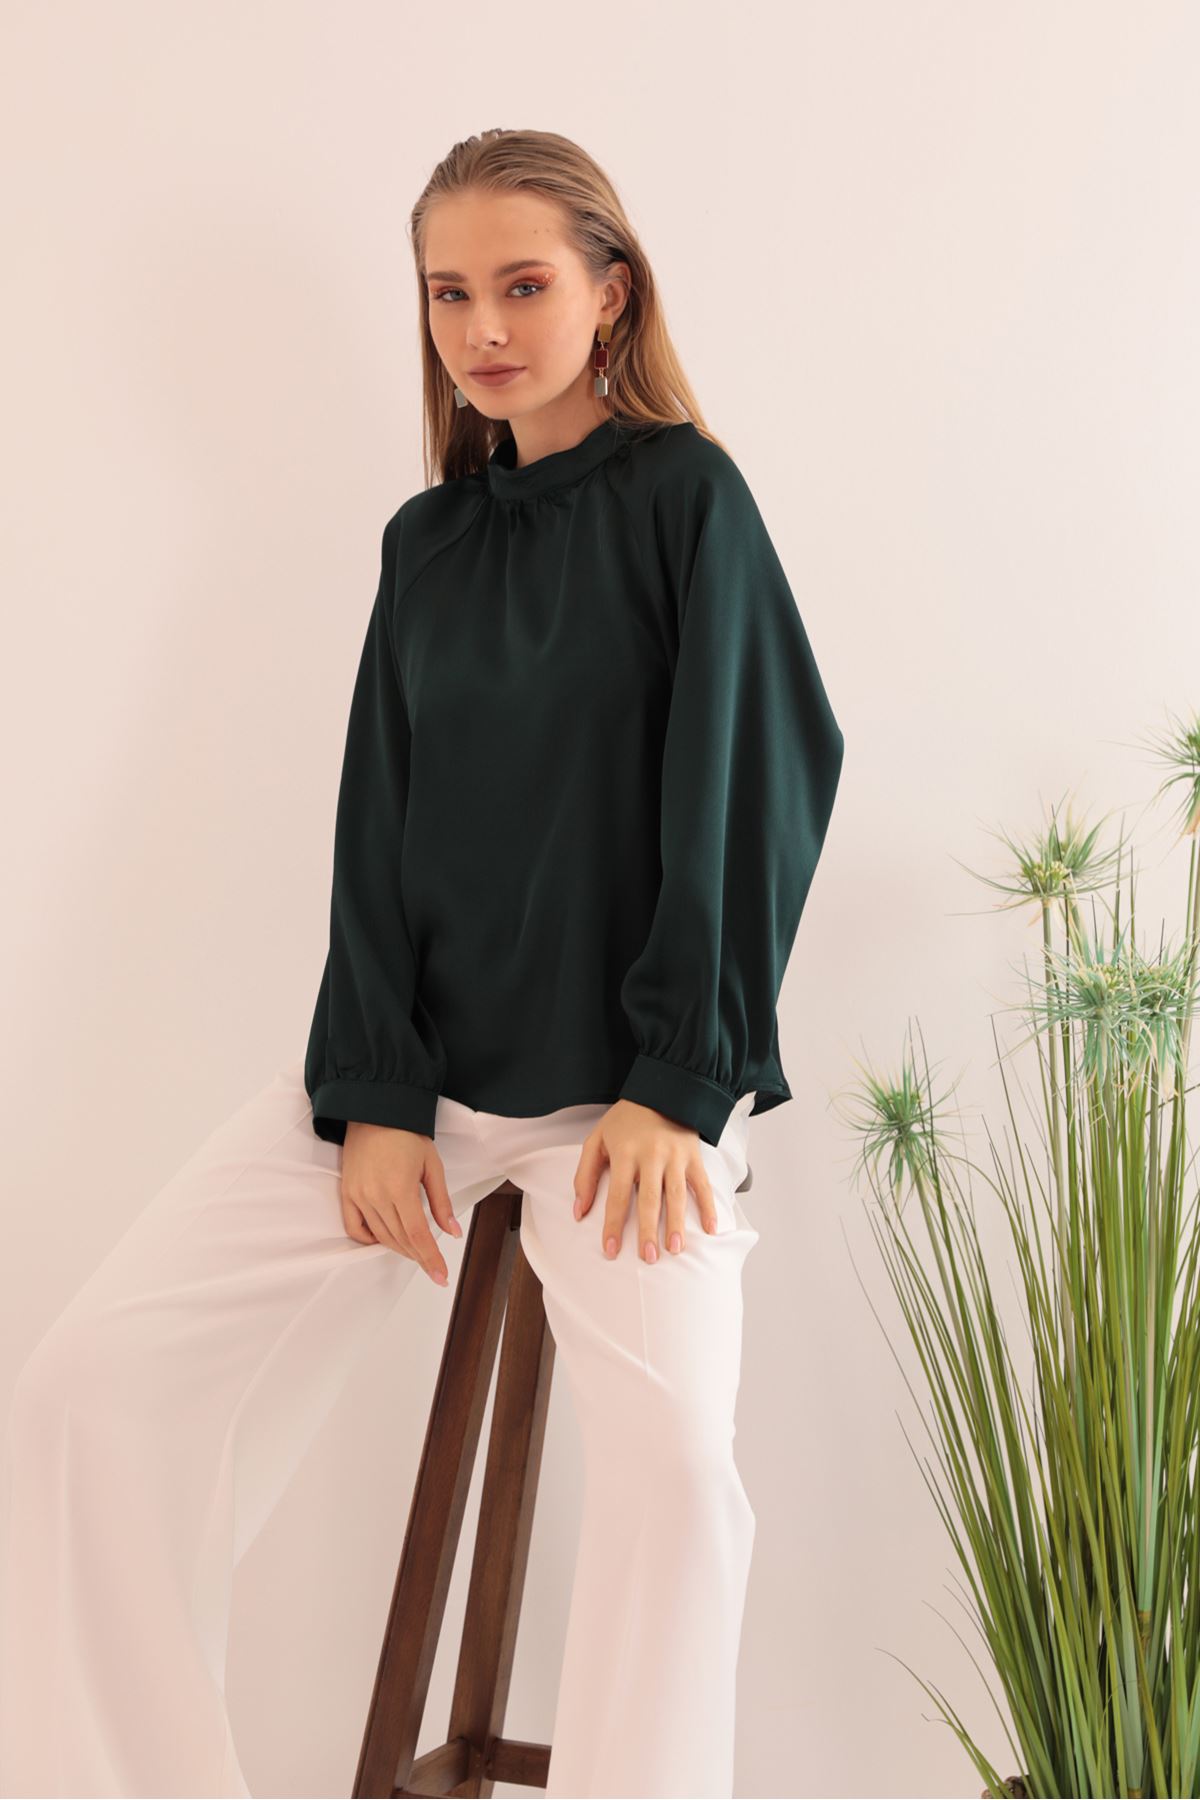 Kobe Satin Fabric Back Detail Women Blouse-Emerald Green